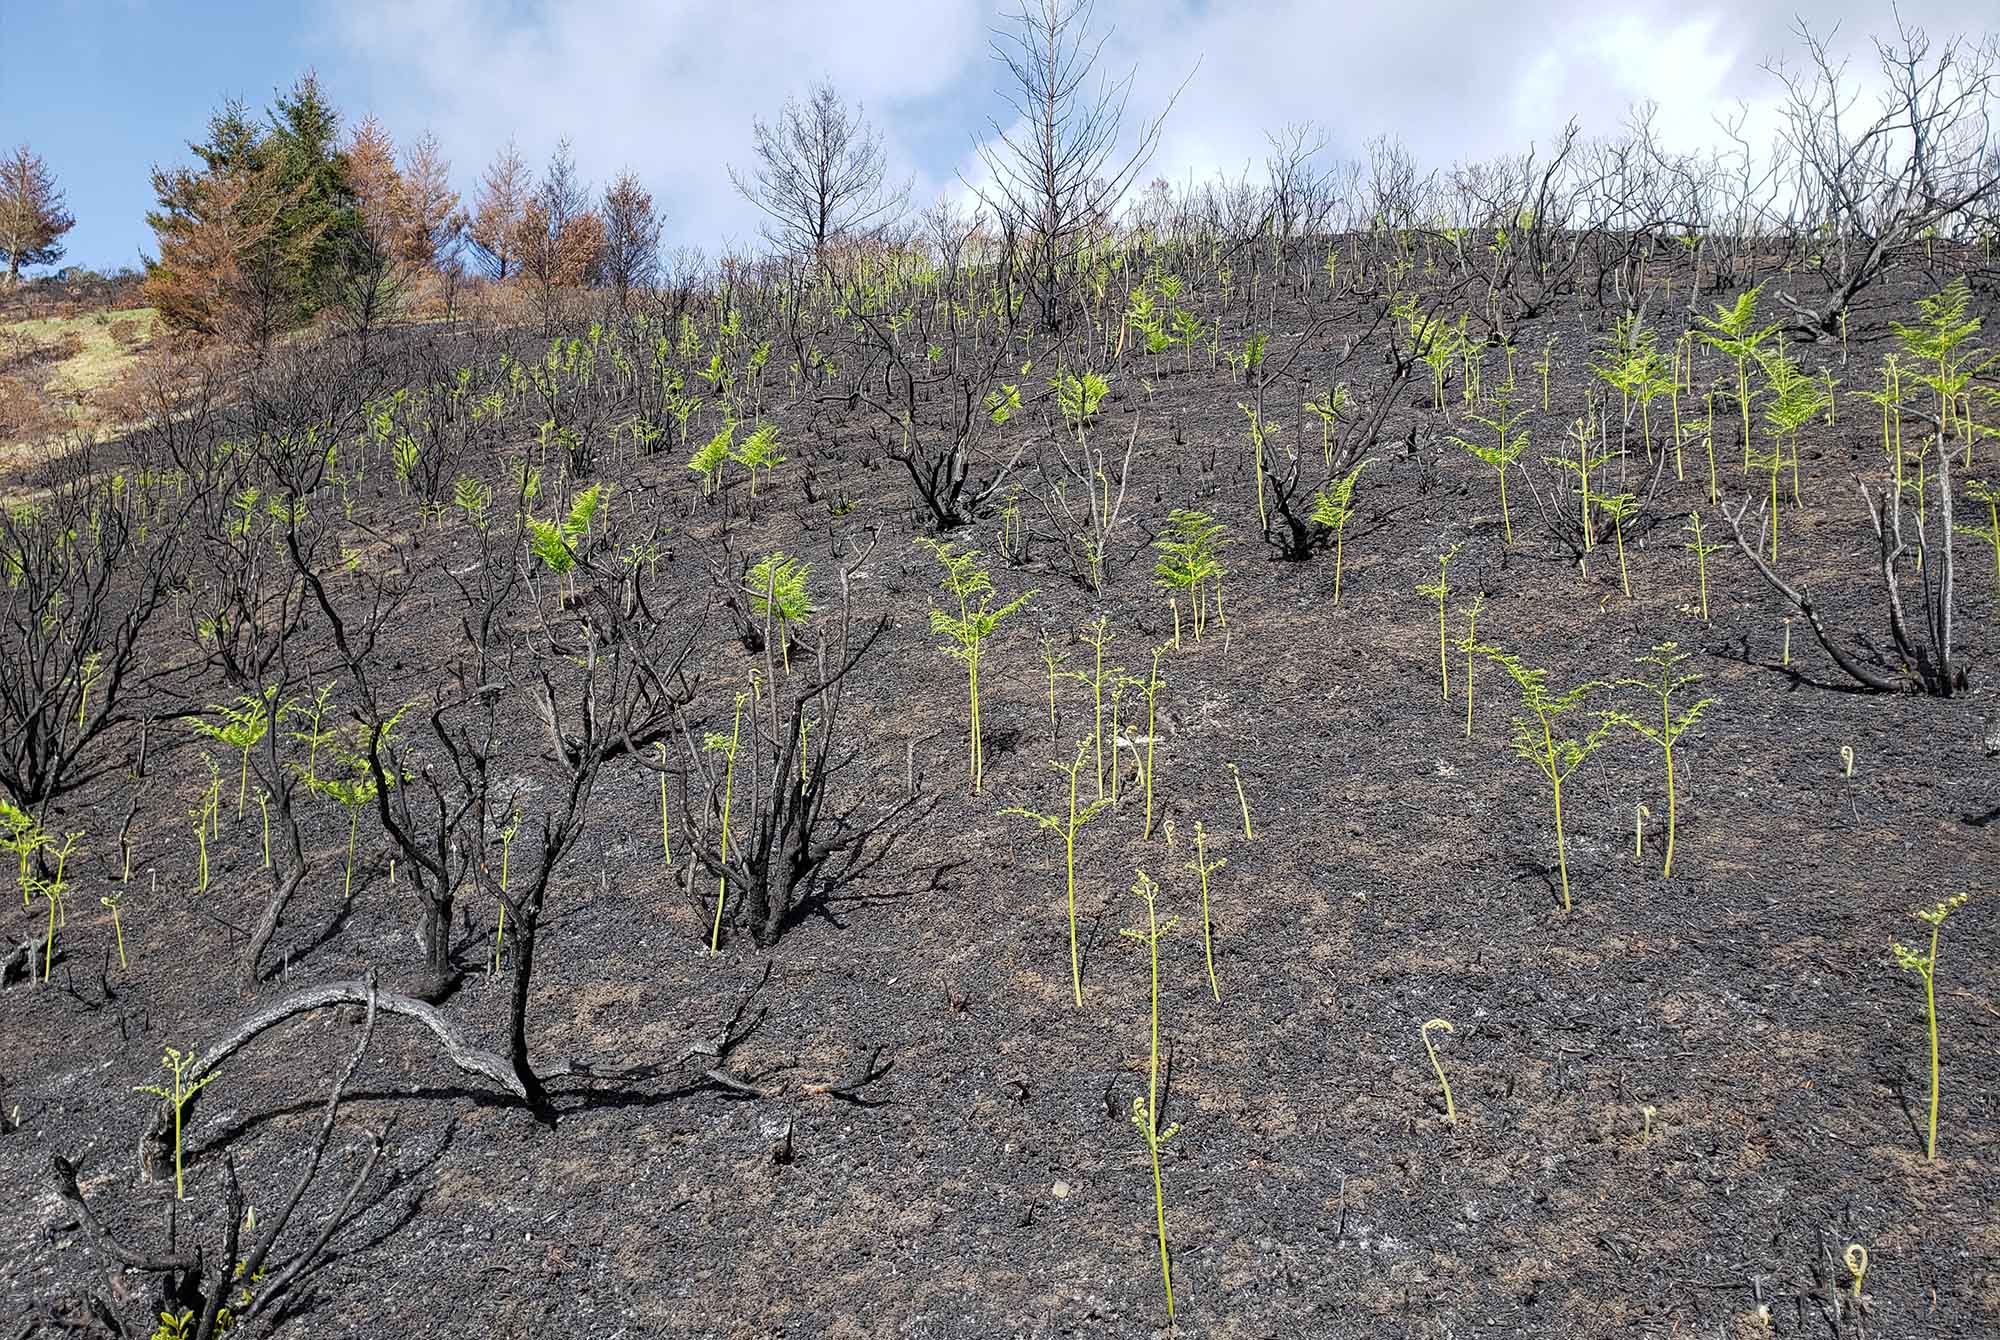 Surviving Coastal Wood Fern (Dryopteris arguta) reaching up from the burn scar.